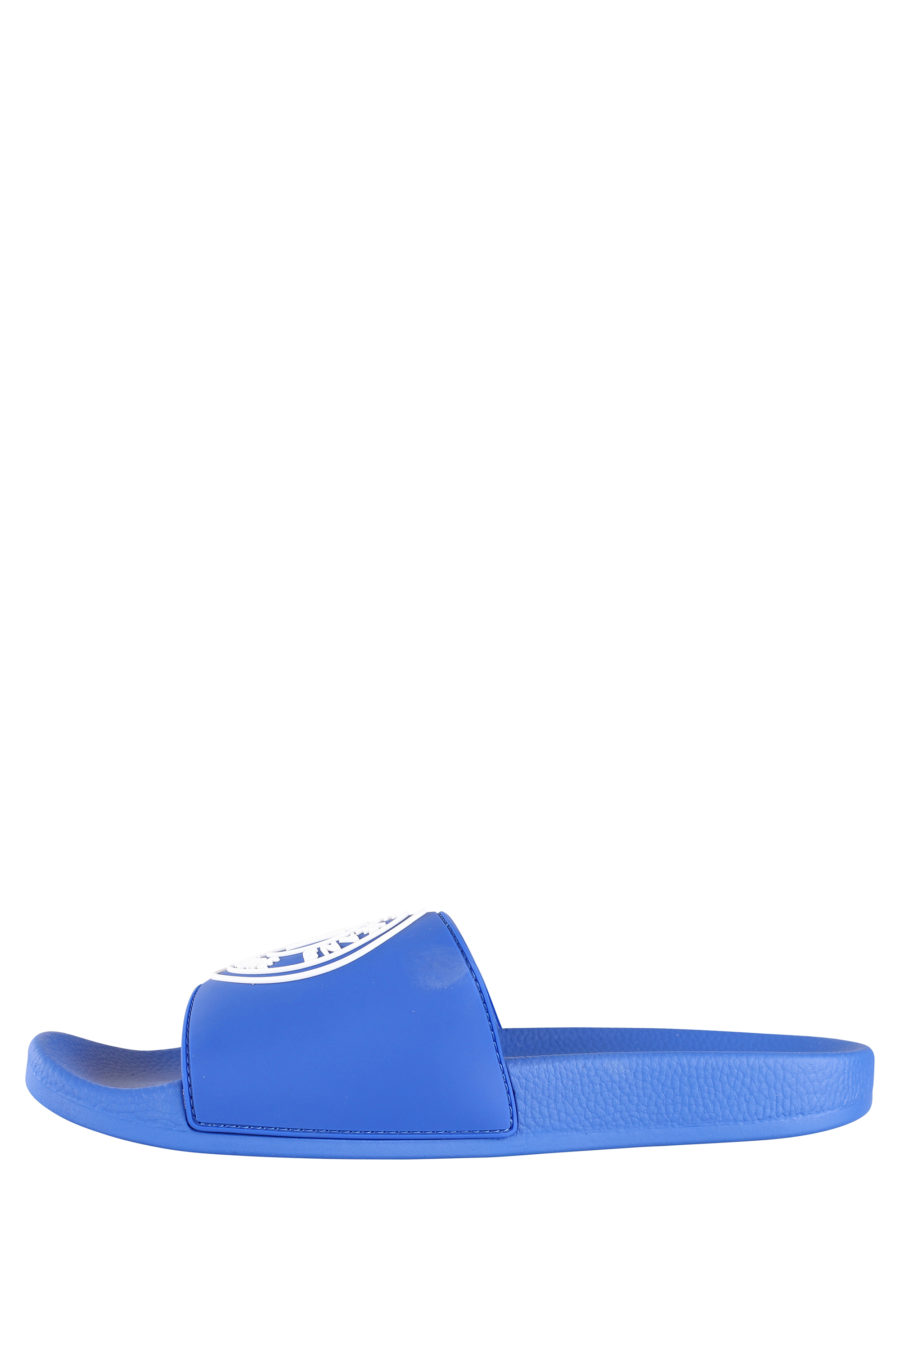 Blue flip flops with circle logo - IMG 9668